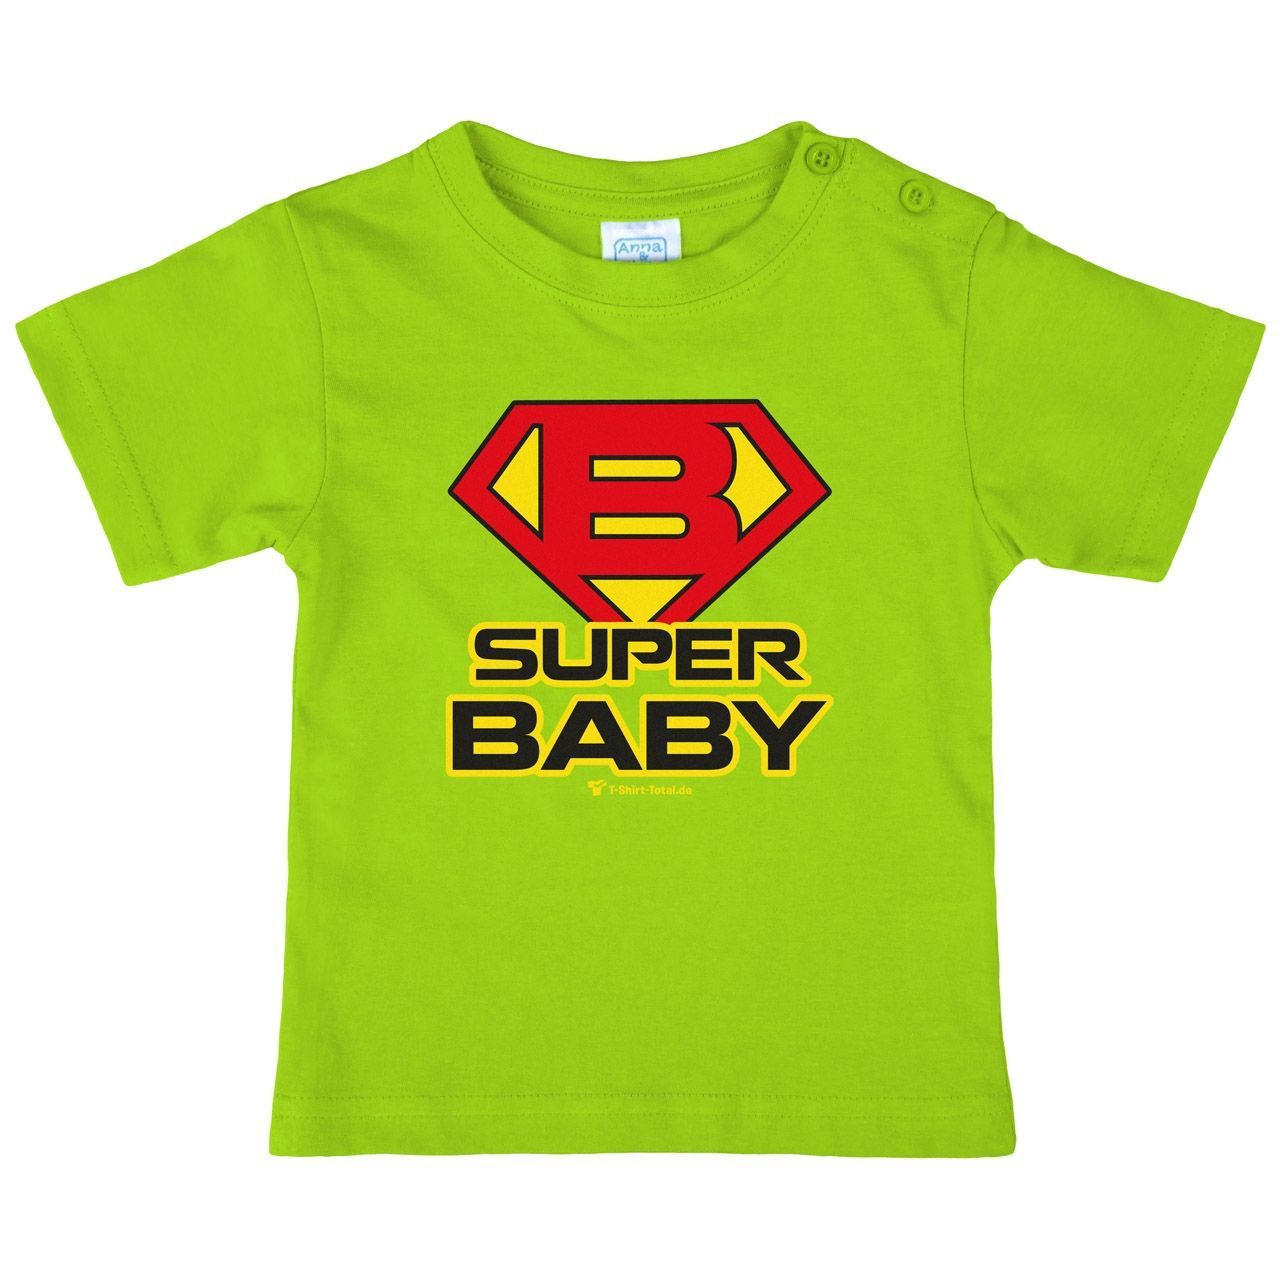 Super Baby Kinder T-Shirt hellgrün 92